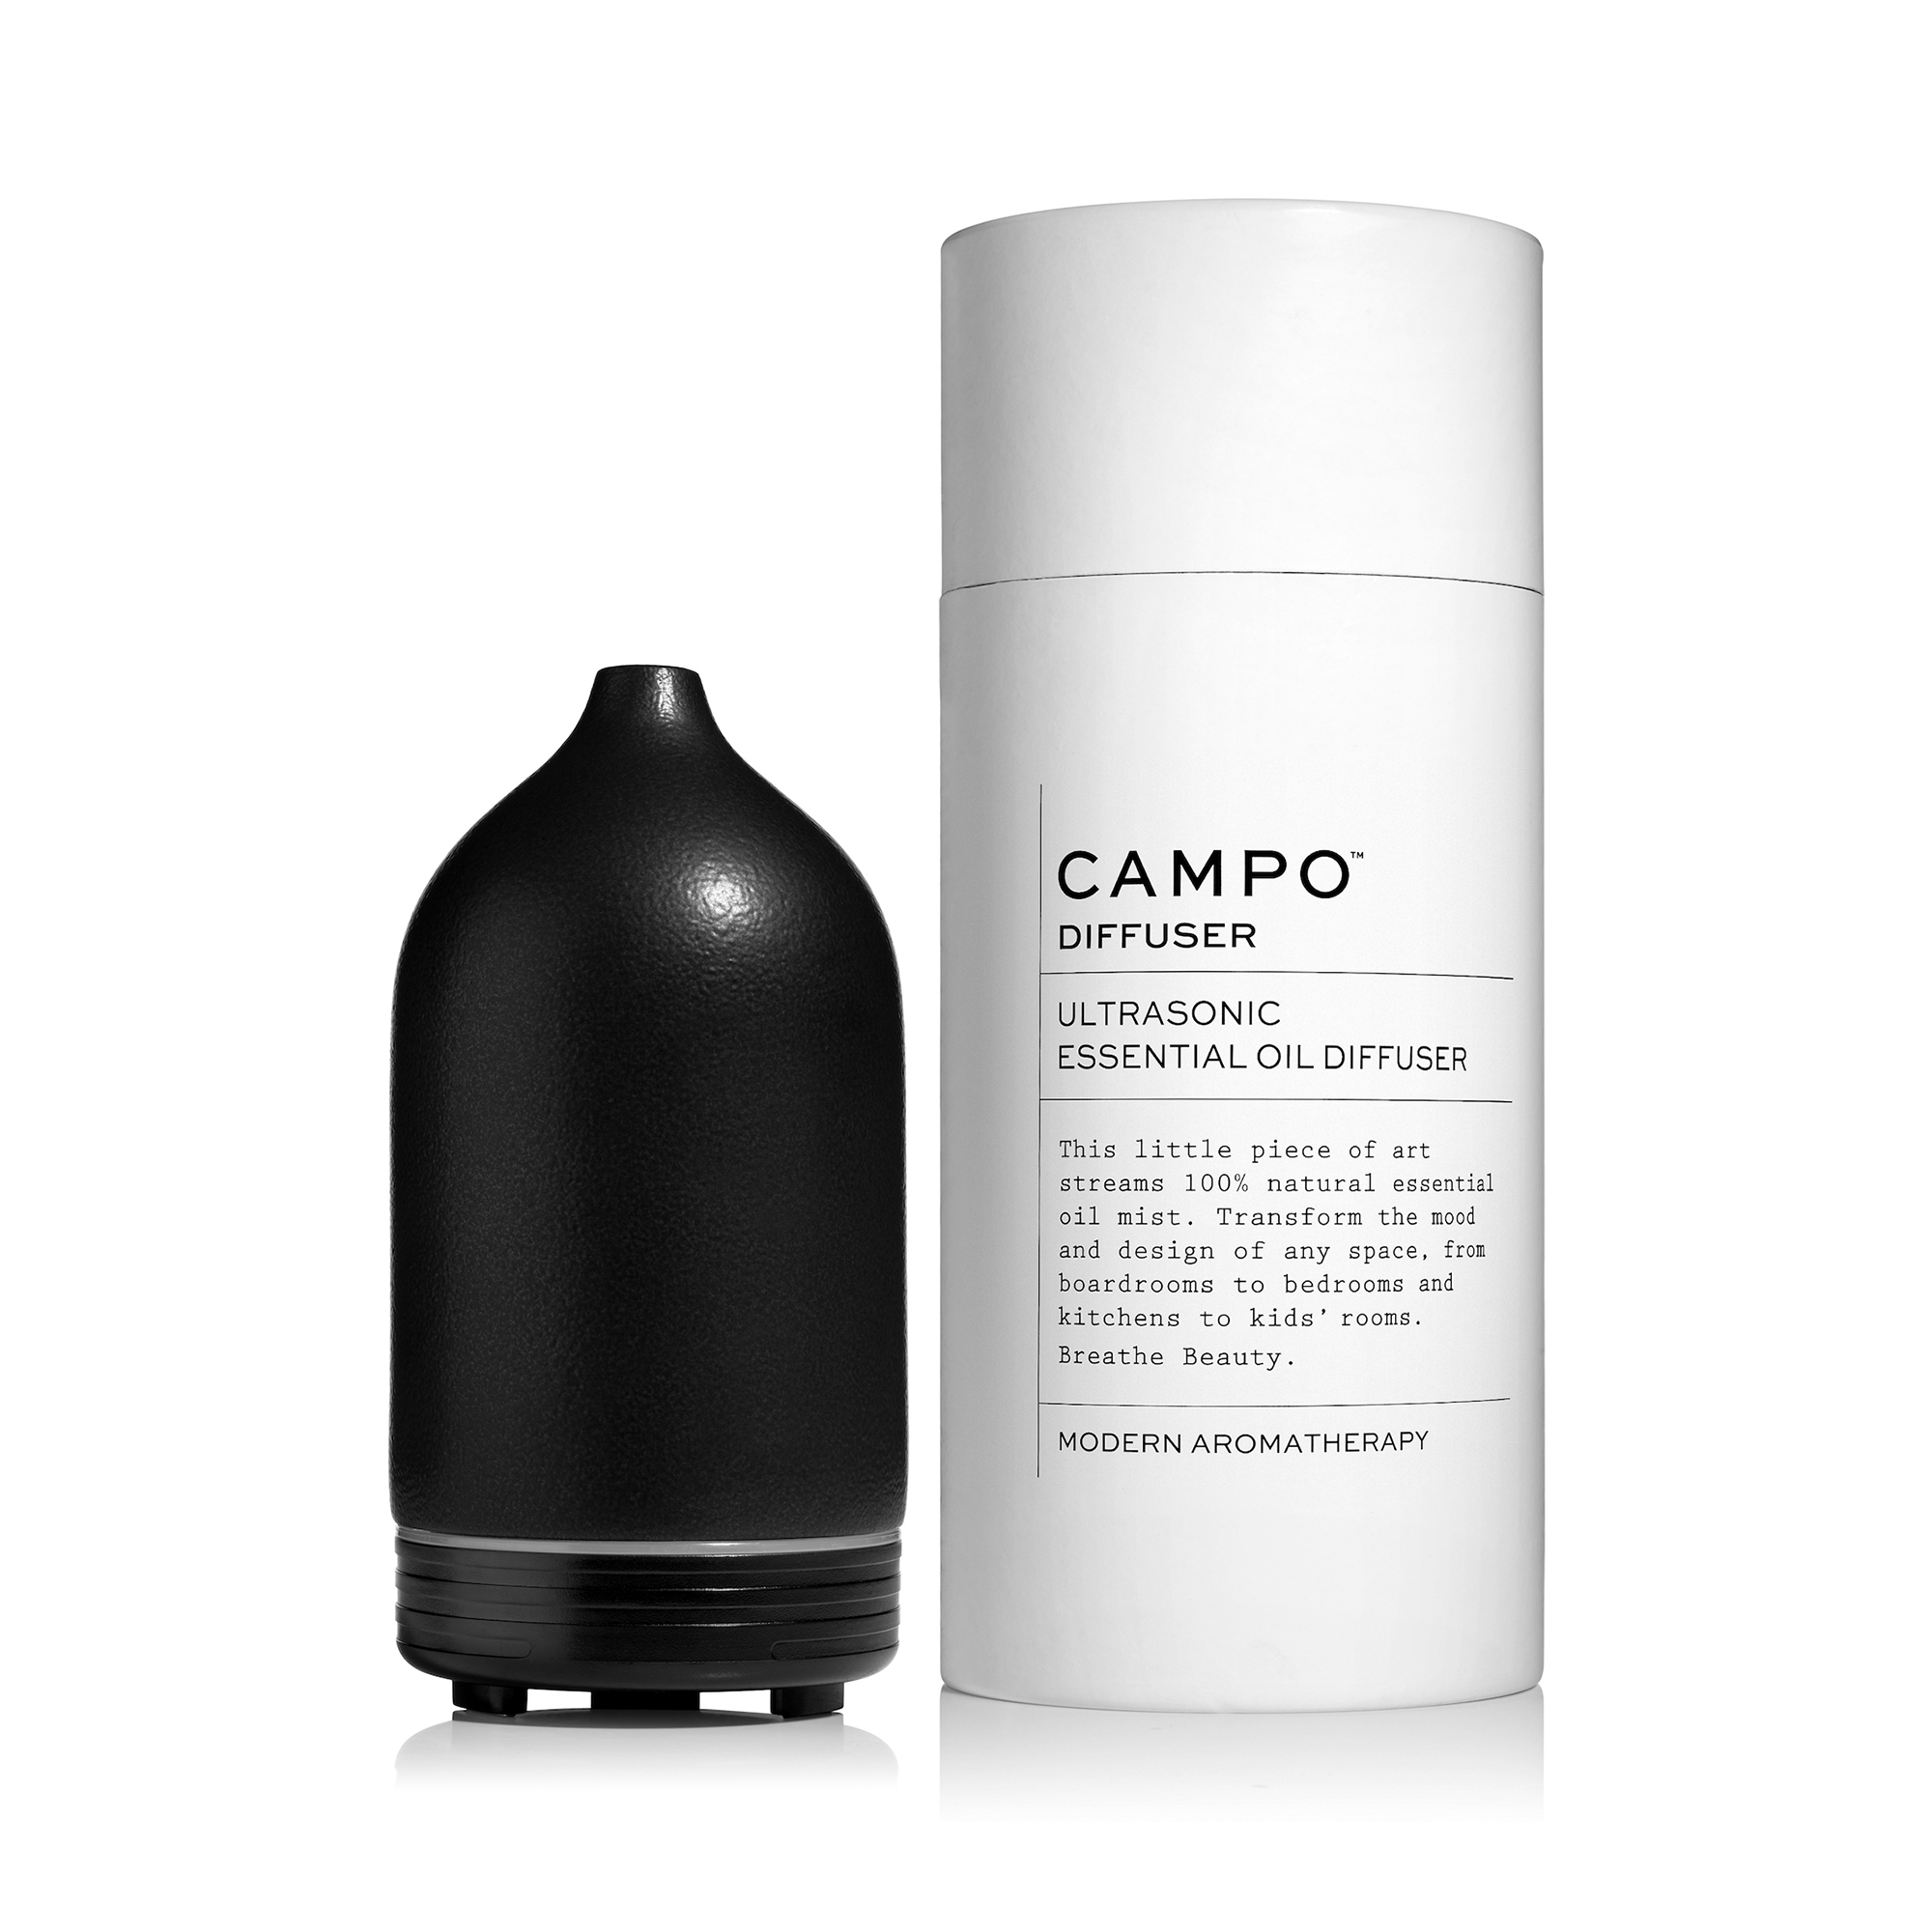 Elegant black diffuser that releases essential oils through ultrasonic technology.